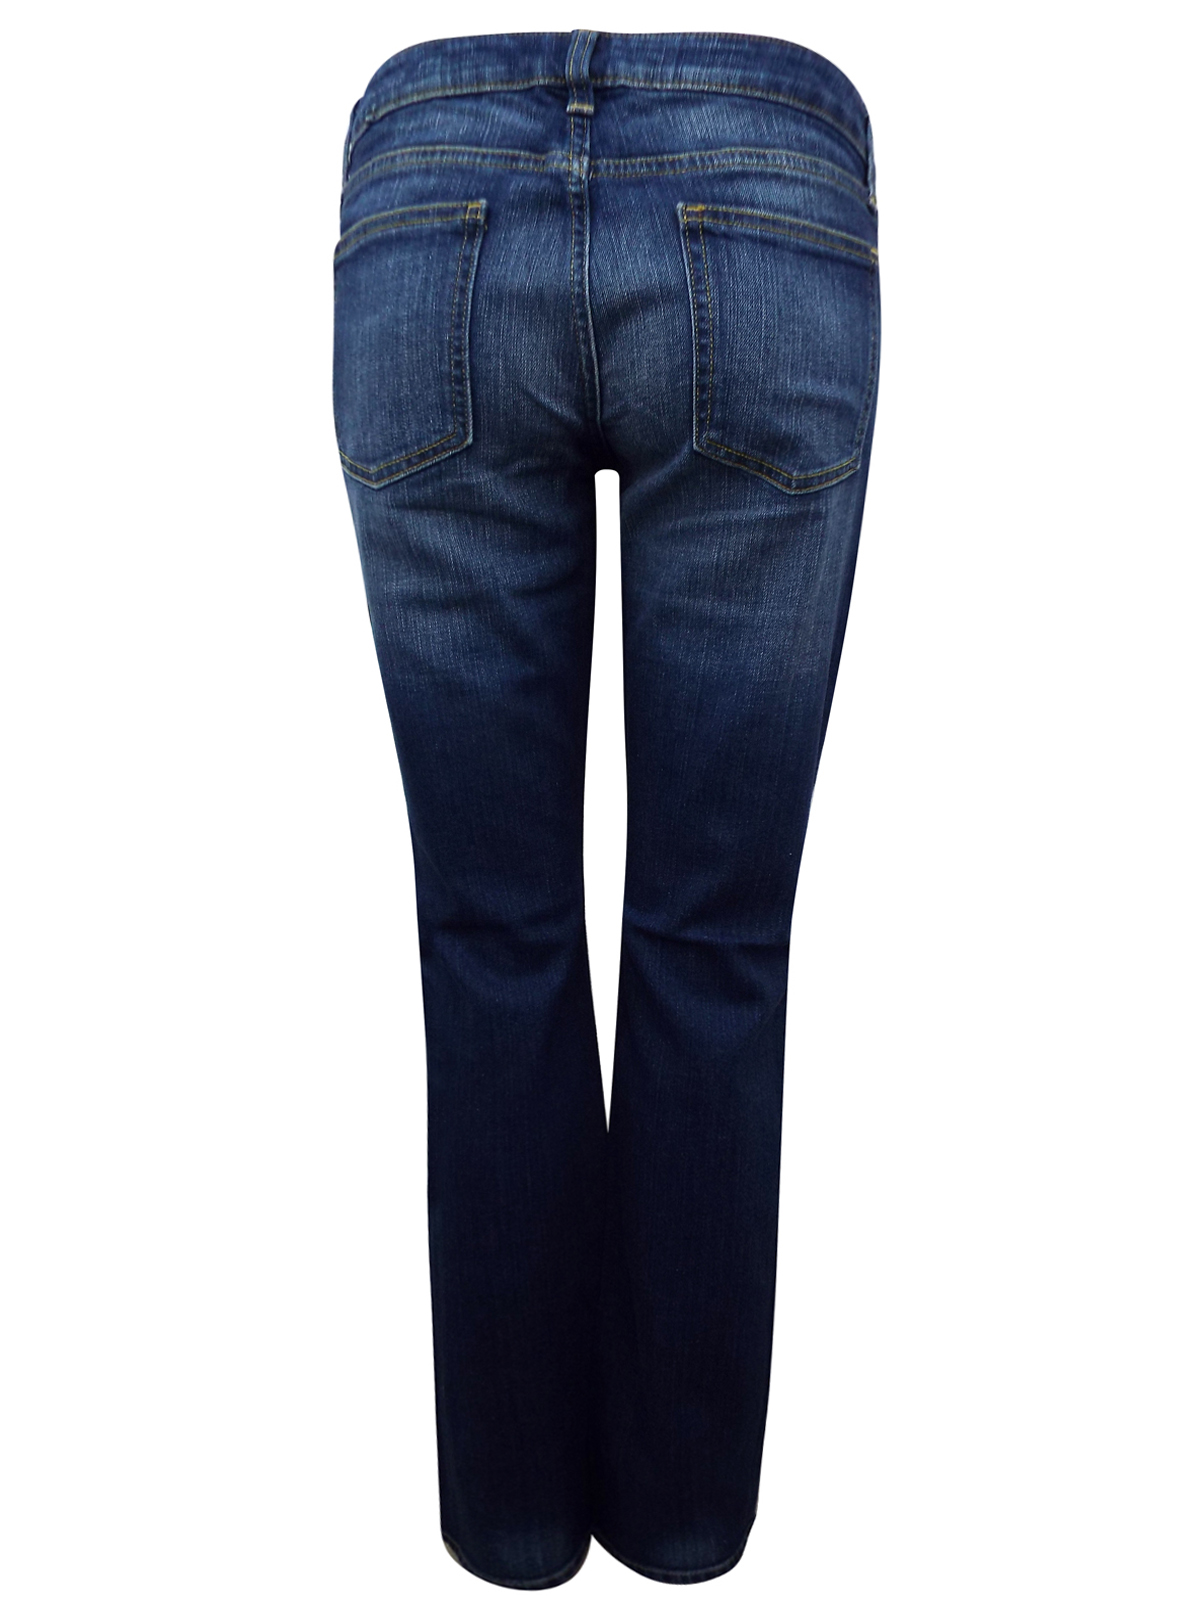 GAP INDIGO Premium Curvy Straight Denim Jeans - Size 10 to 18 (US 6 to 14)